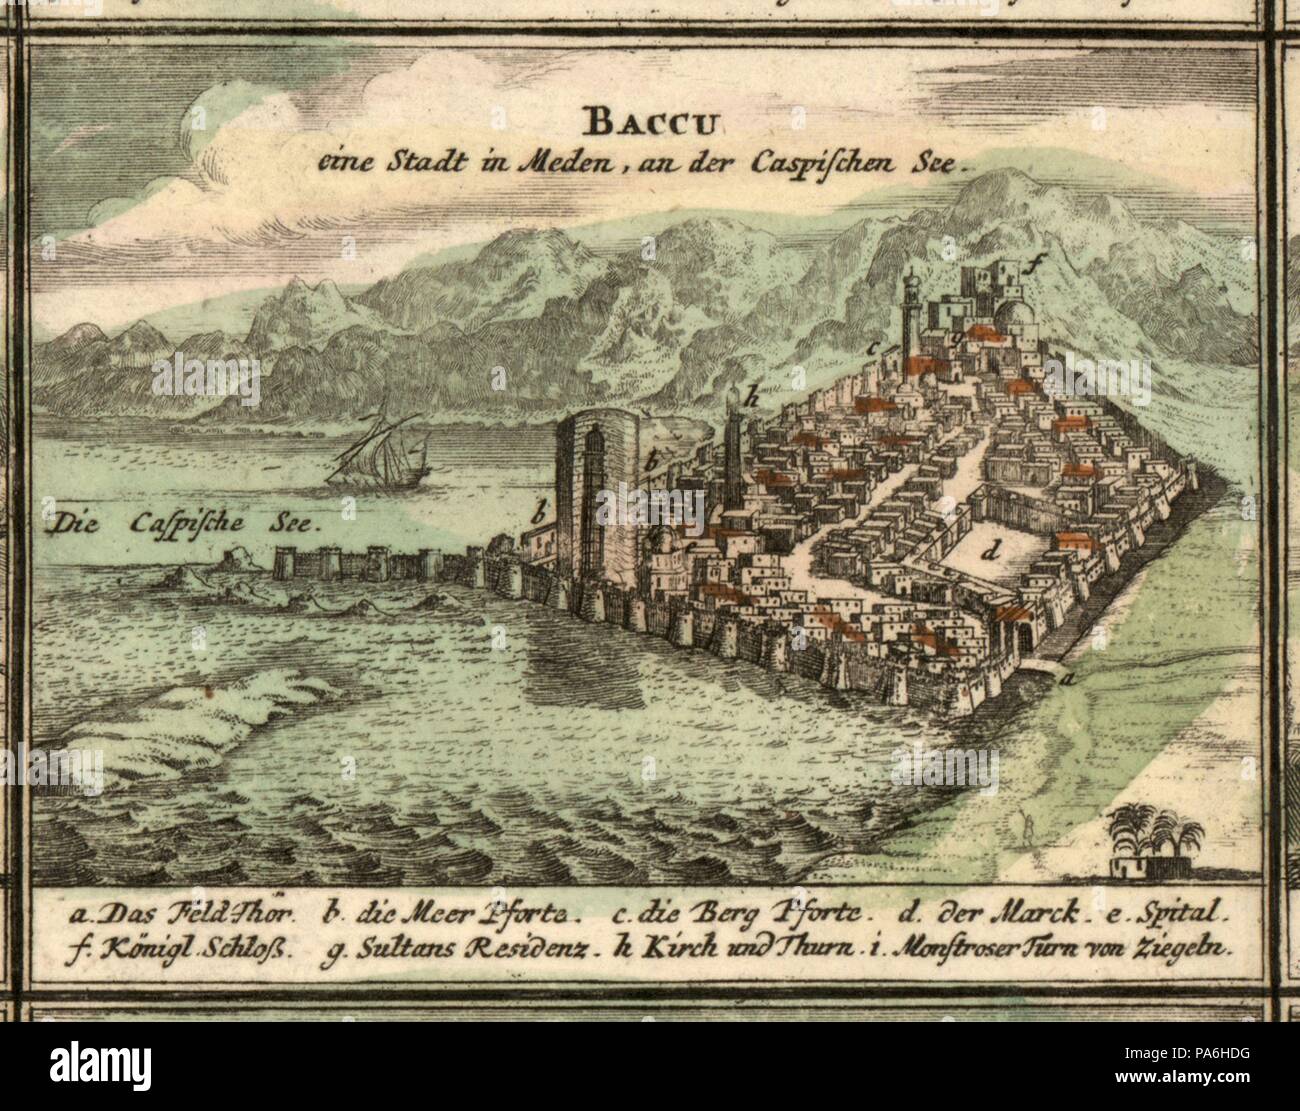 Map of Baku. Museum: Universiteitsbibliotheek Leiden. Stock Photo